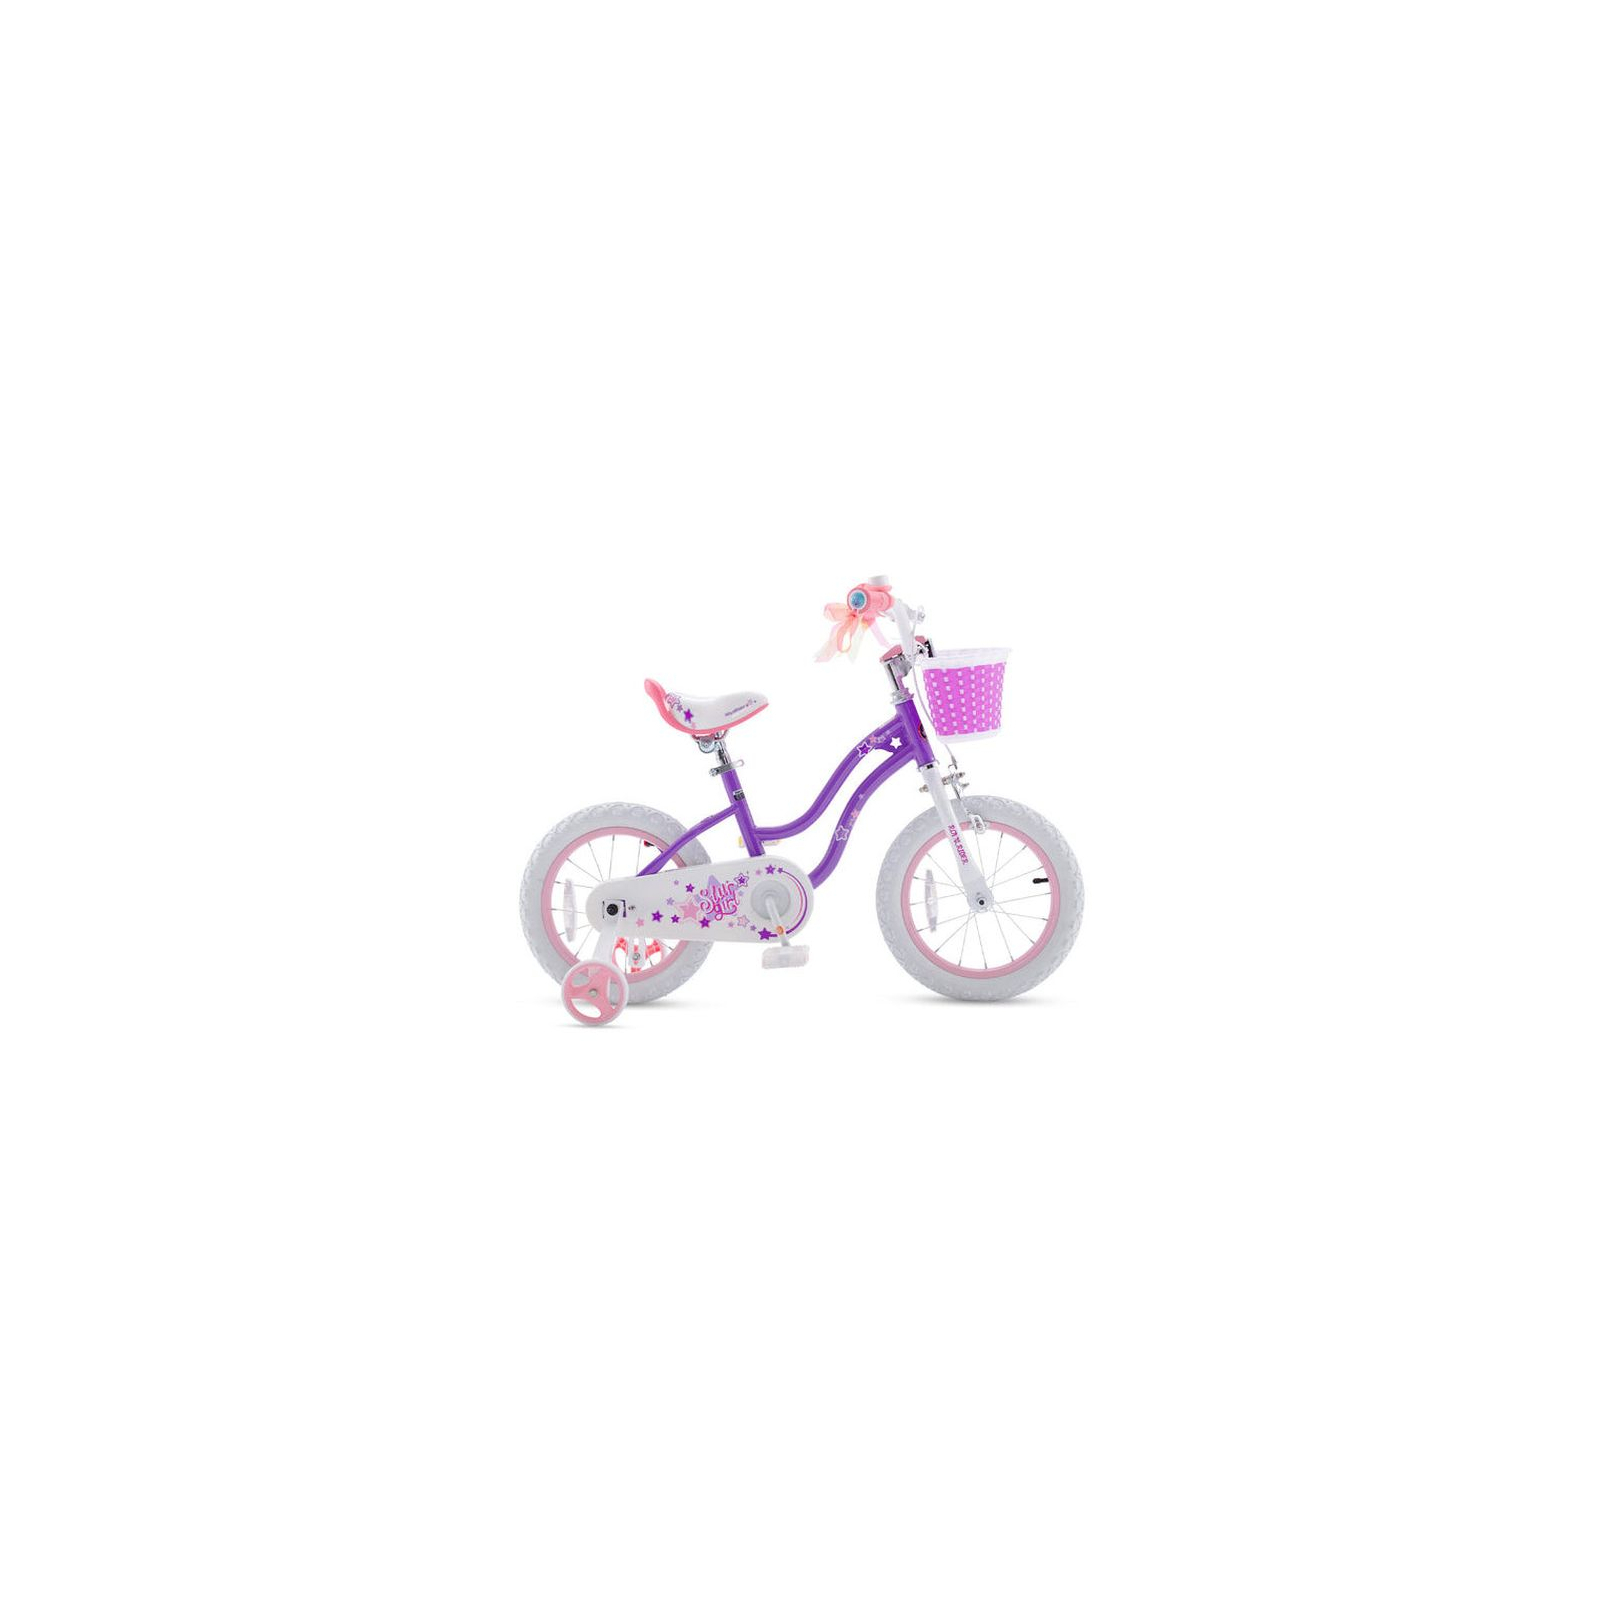 Детский велосипед Royal Baby Star Girl 14", Officaial UA, пурпурный (RB14G-1-PURPLE)